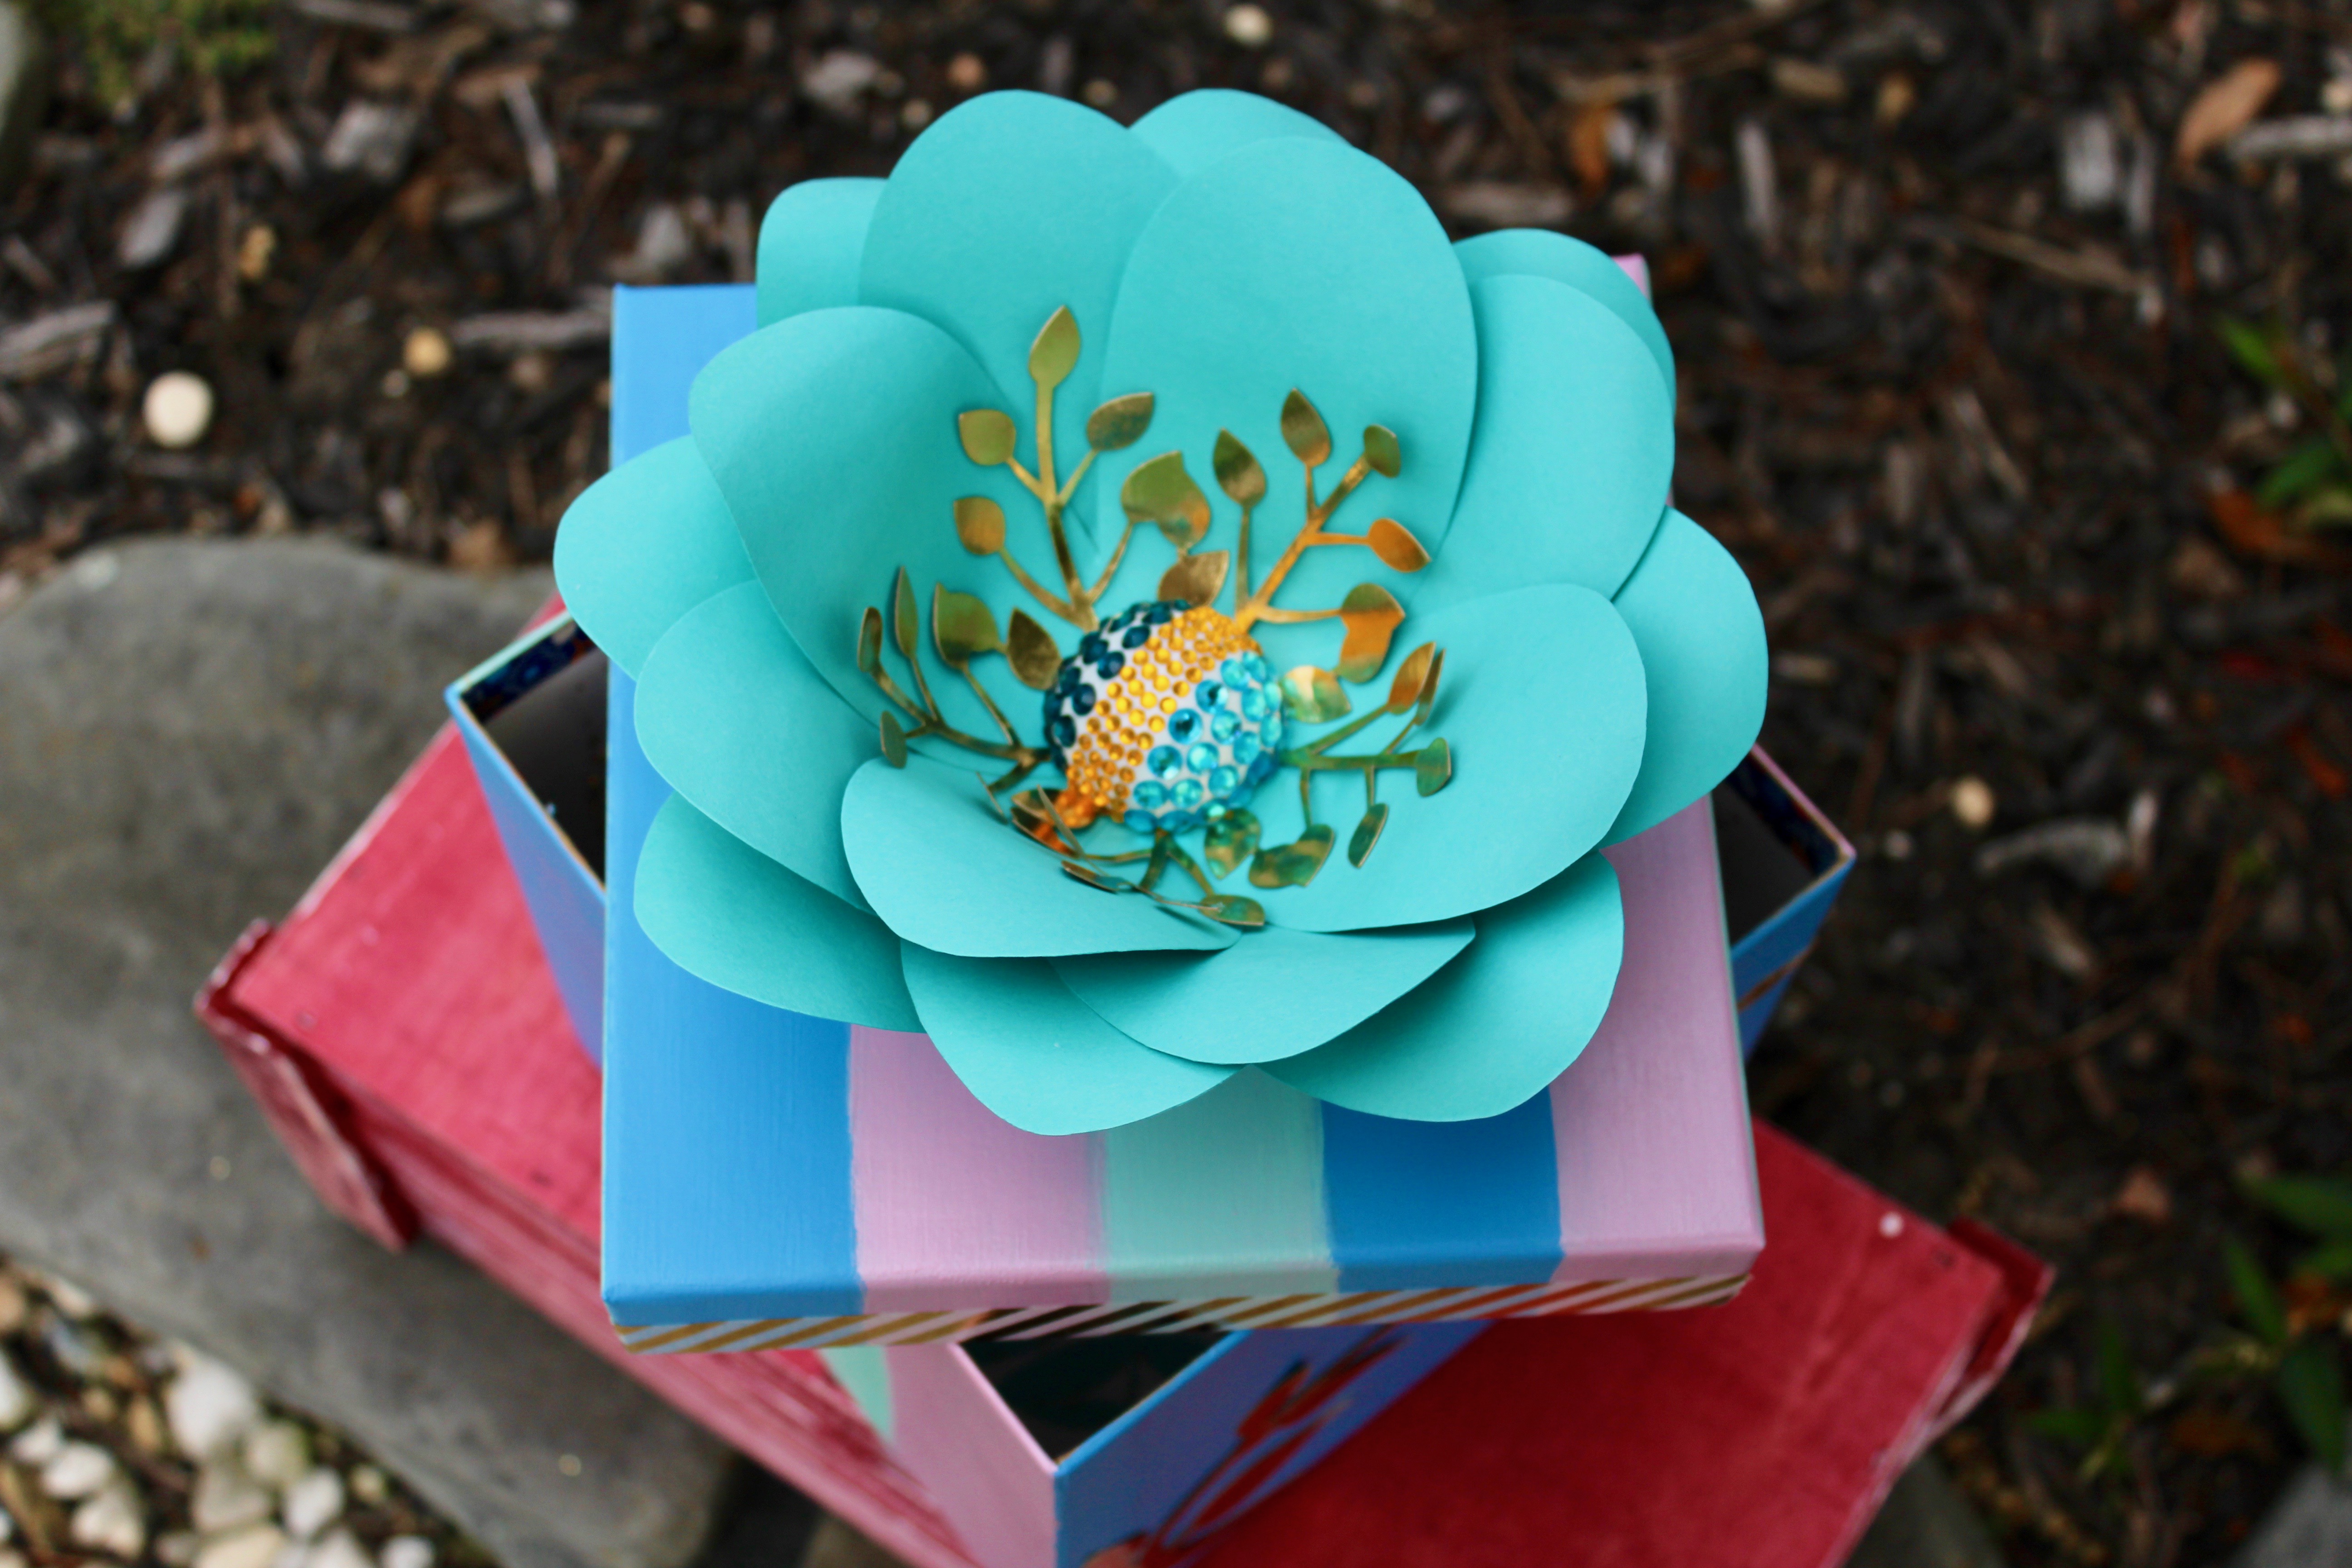 Soul Sprinkles DIY Box | Photo Collage | Treasure Keeper | Self-Love | Self-Worth | Self-Care | Sprinklings of Love For the Soul | Pastel | Paper Flowers